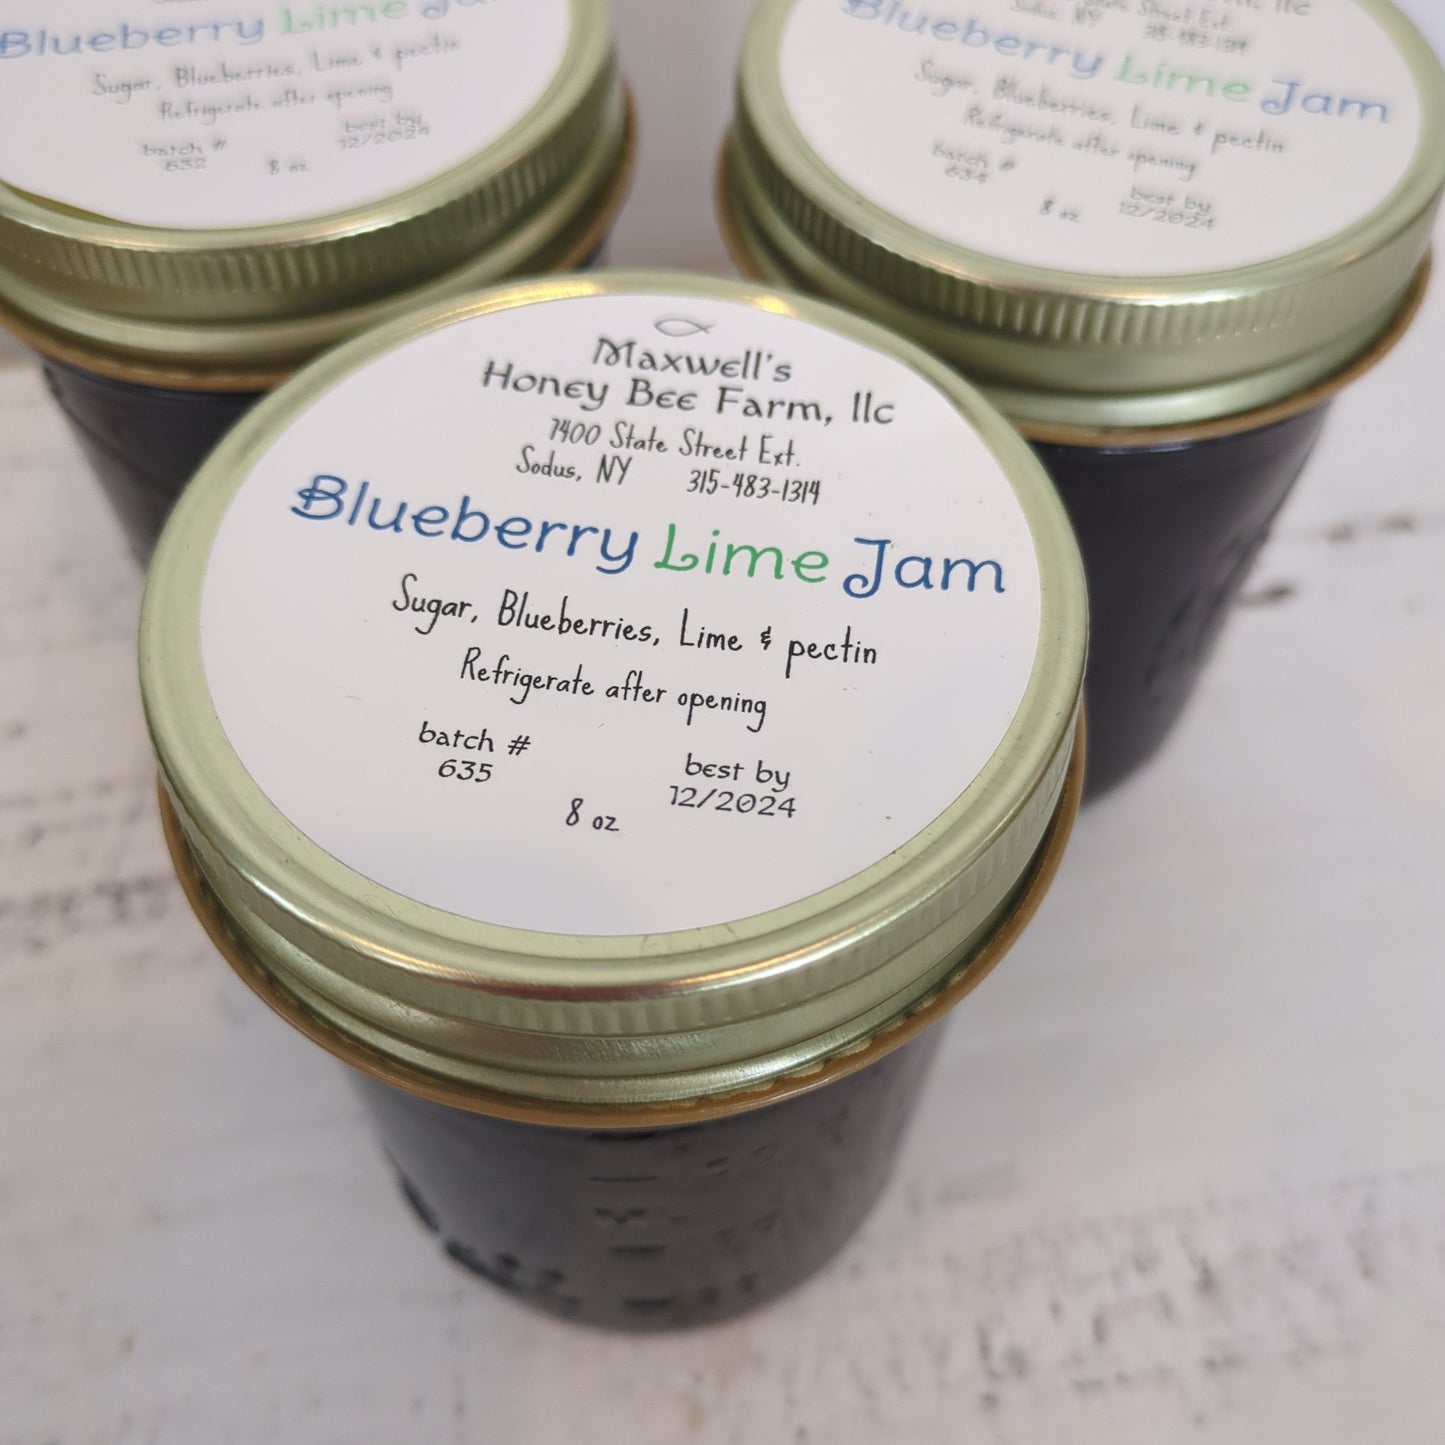 Blueberry Lime Jam